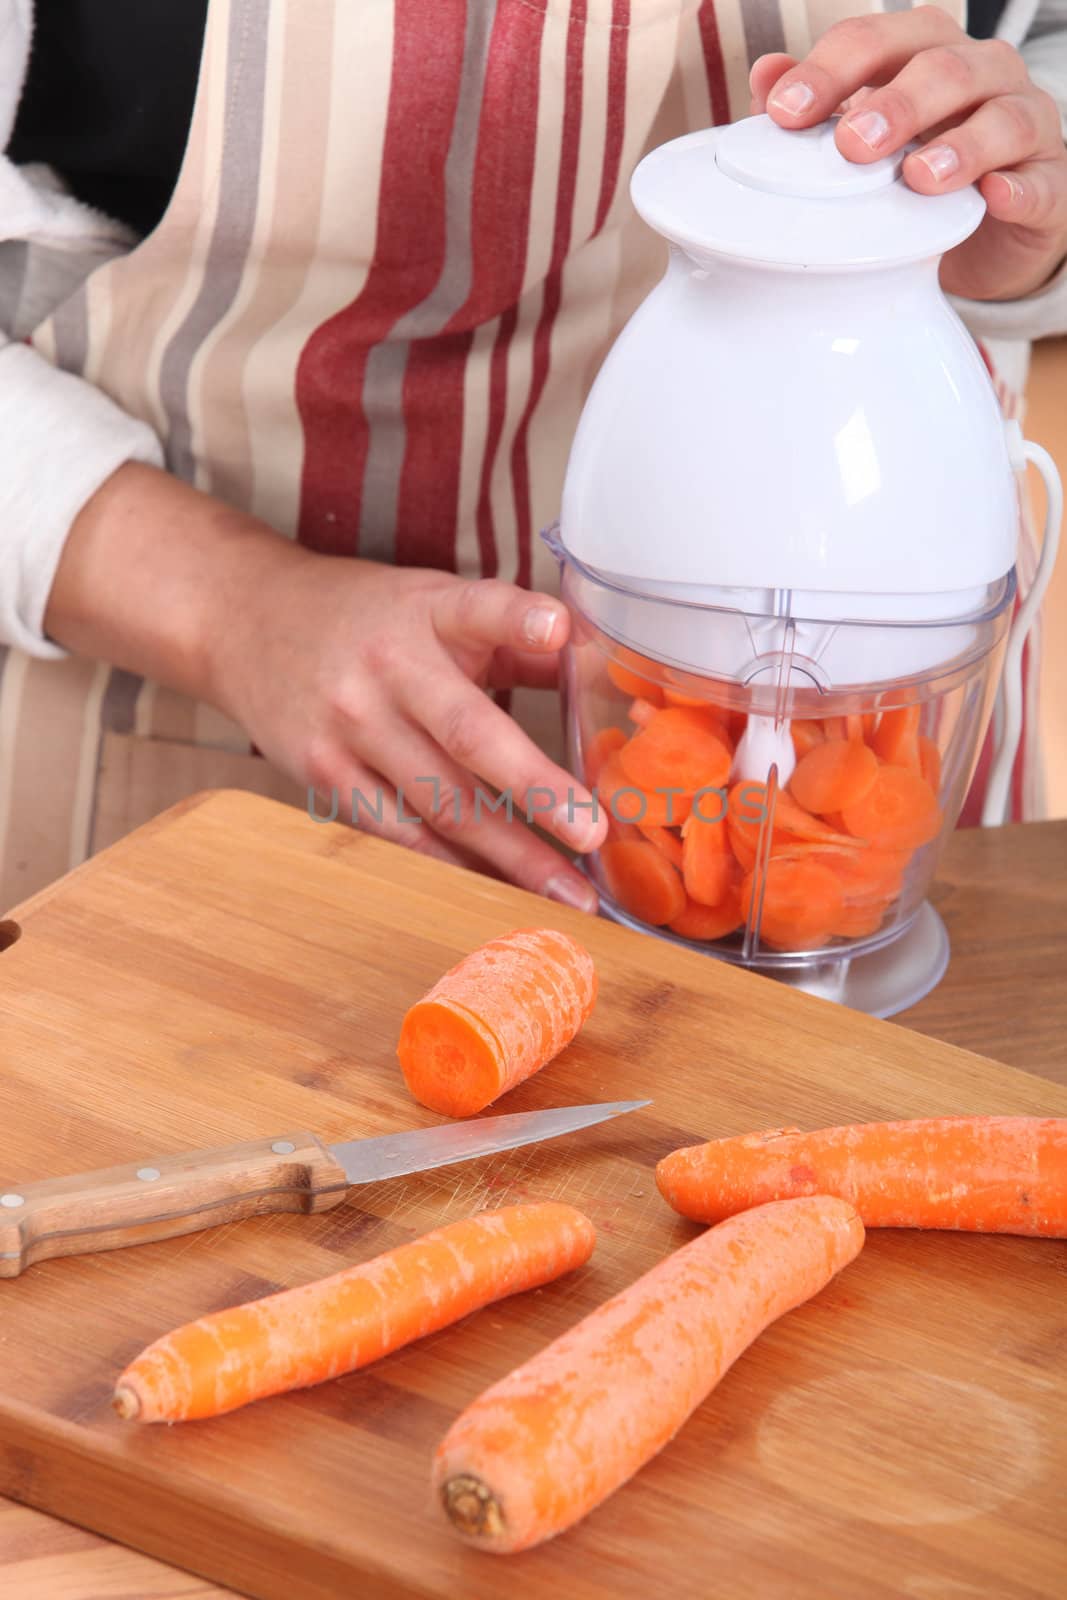 Woman chopping carrots